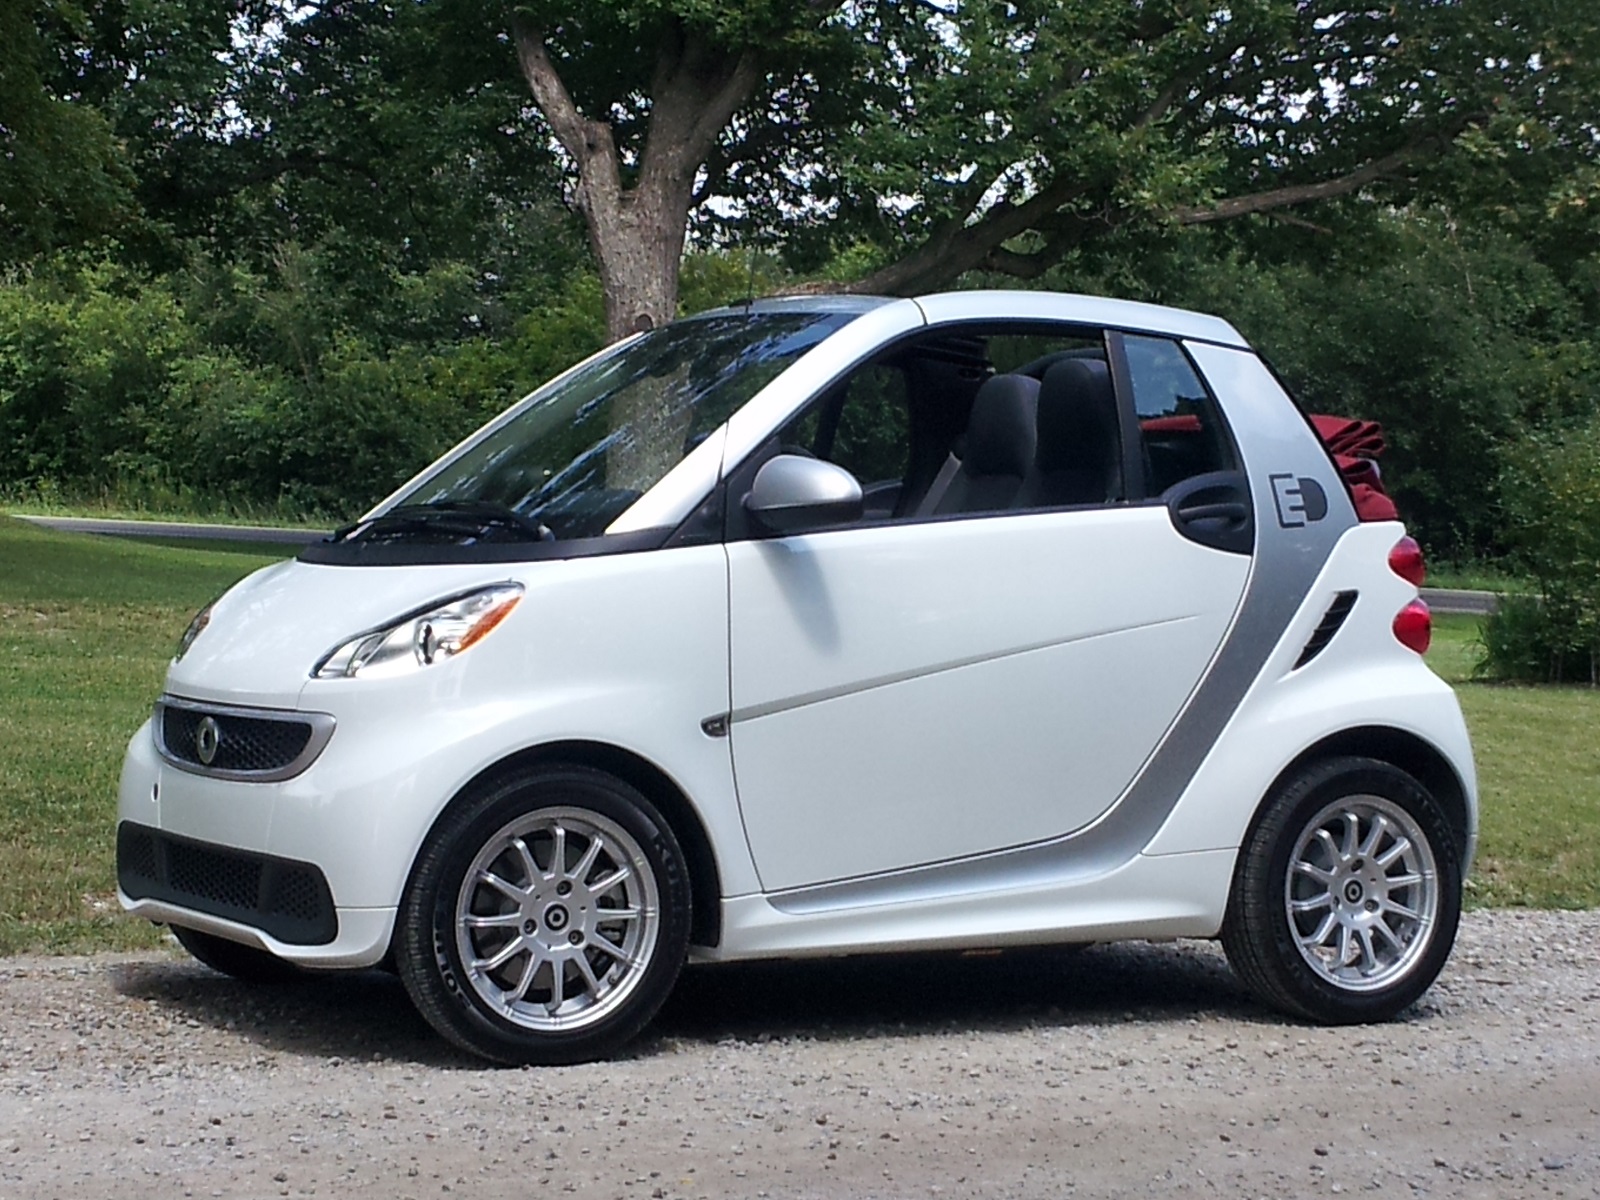 2013 Smart Electric Drive Cabrio: Brief Drive Of Electric Convertible